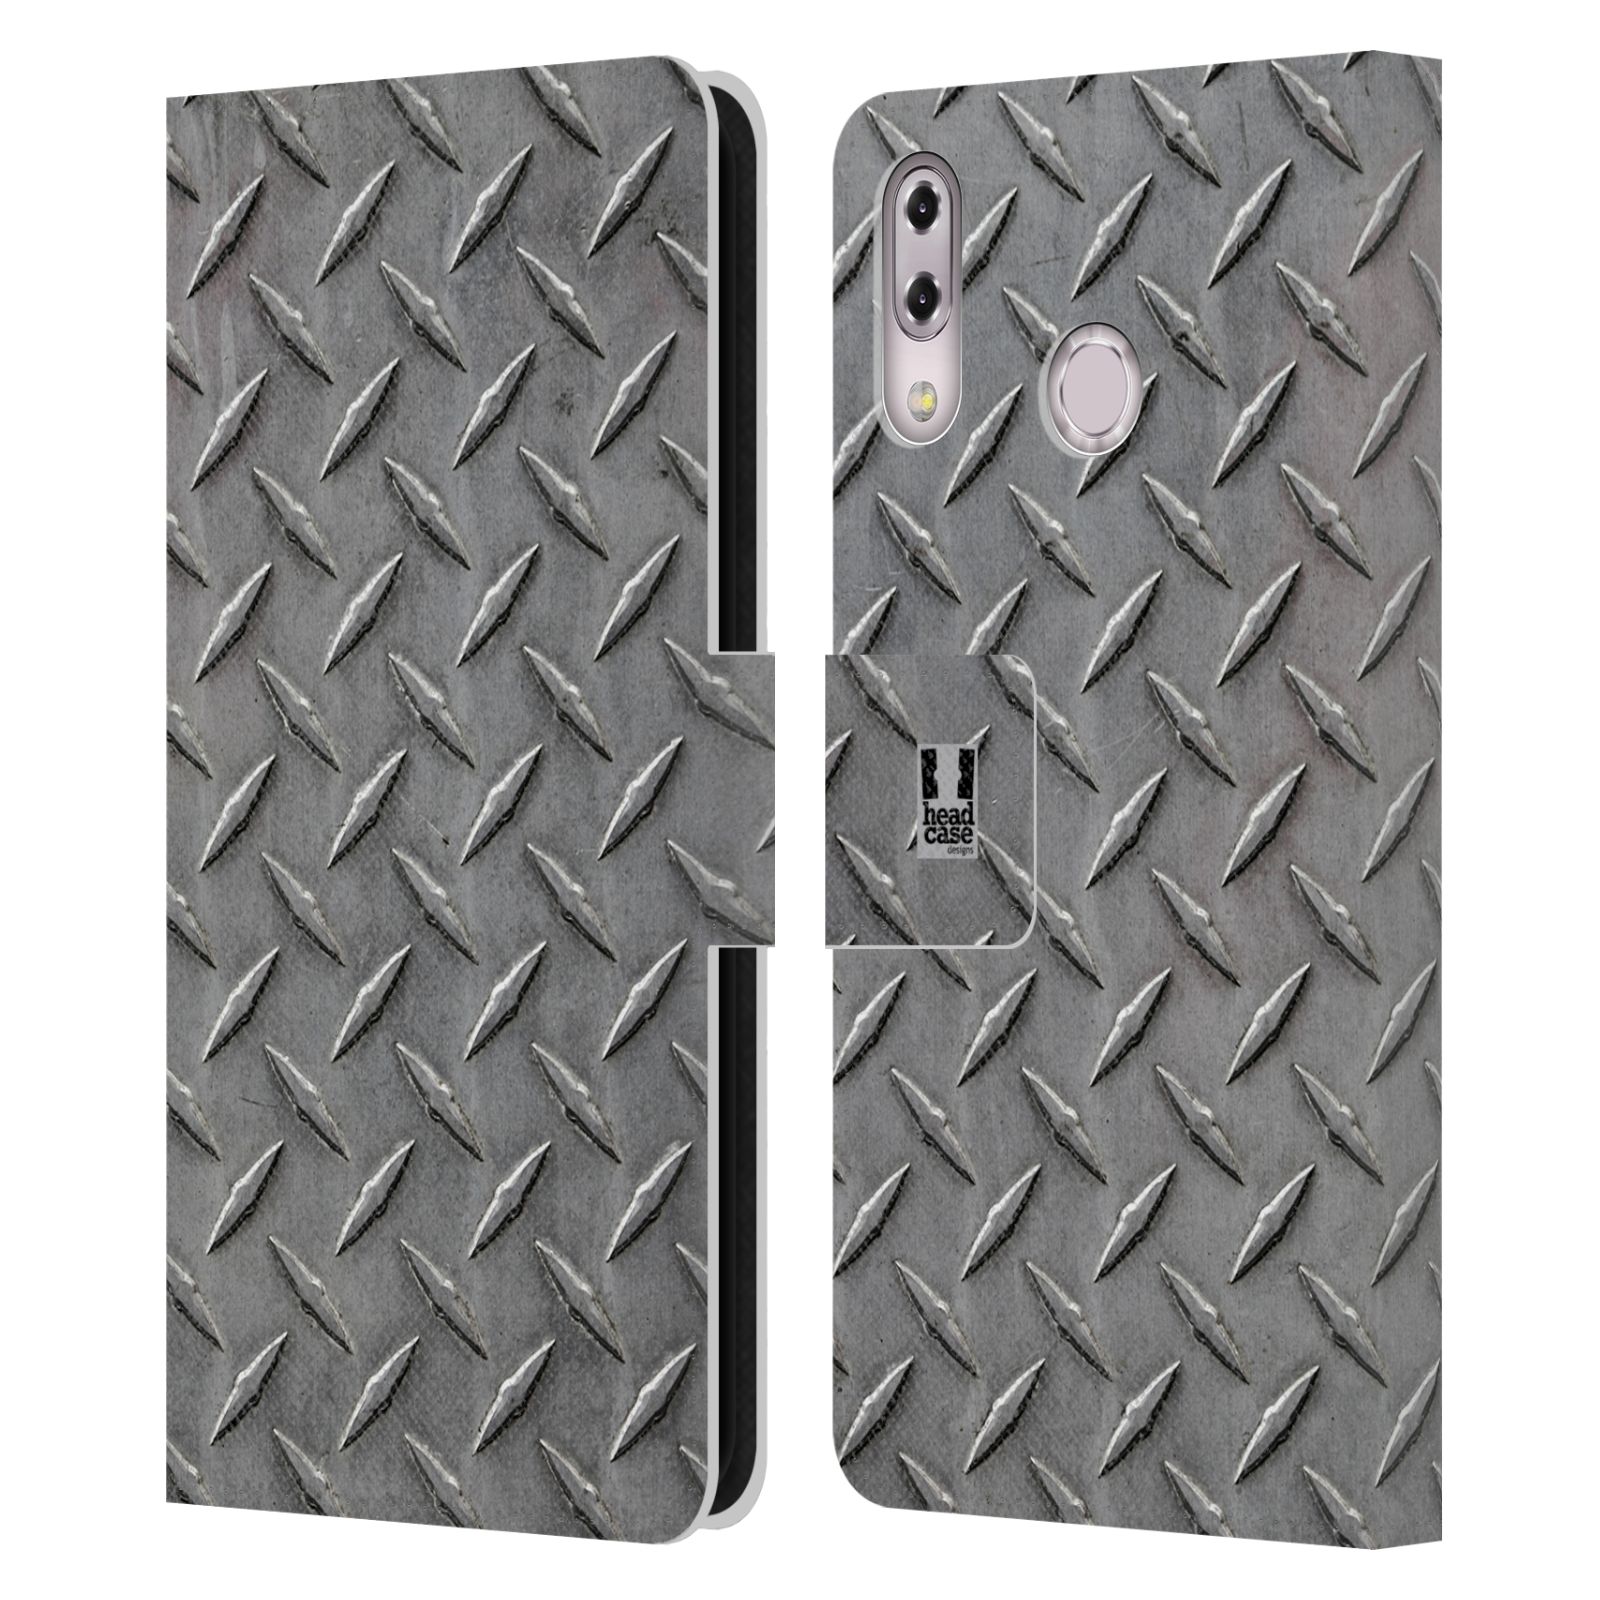 Pouzdro na mobil Asus Zenfone 5z ZS620KL, 5 ZE620KL  - HEAD CASE - Imitace plechu